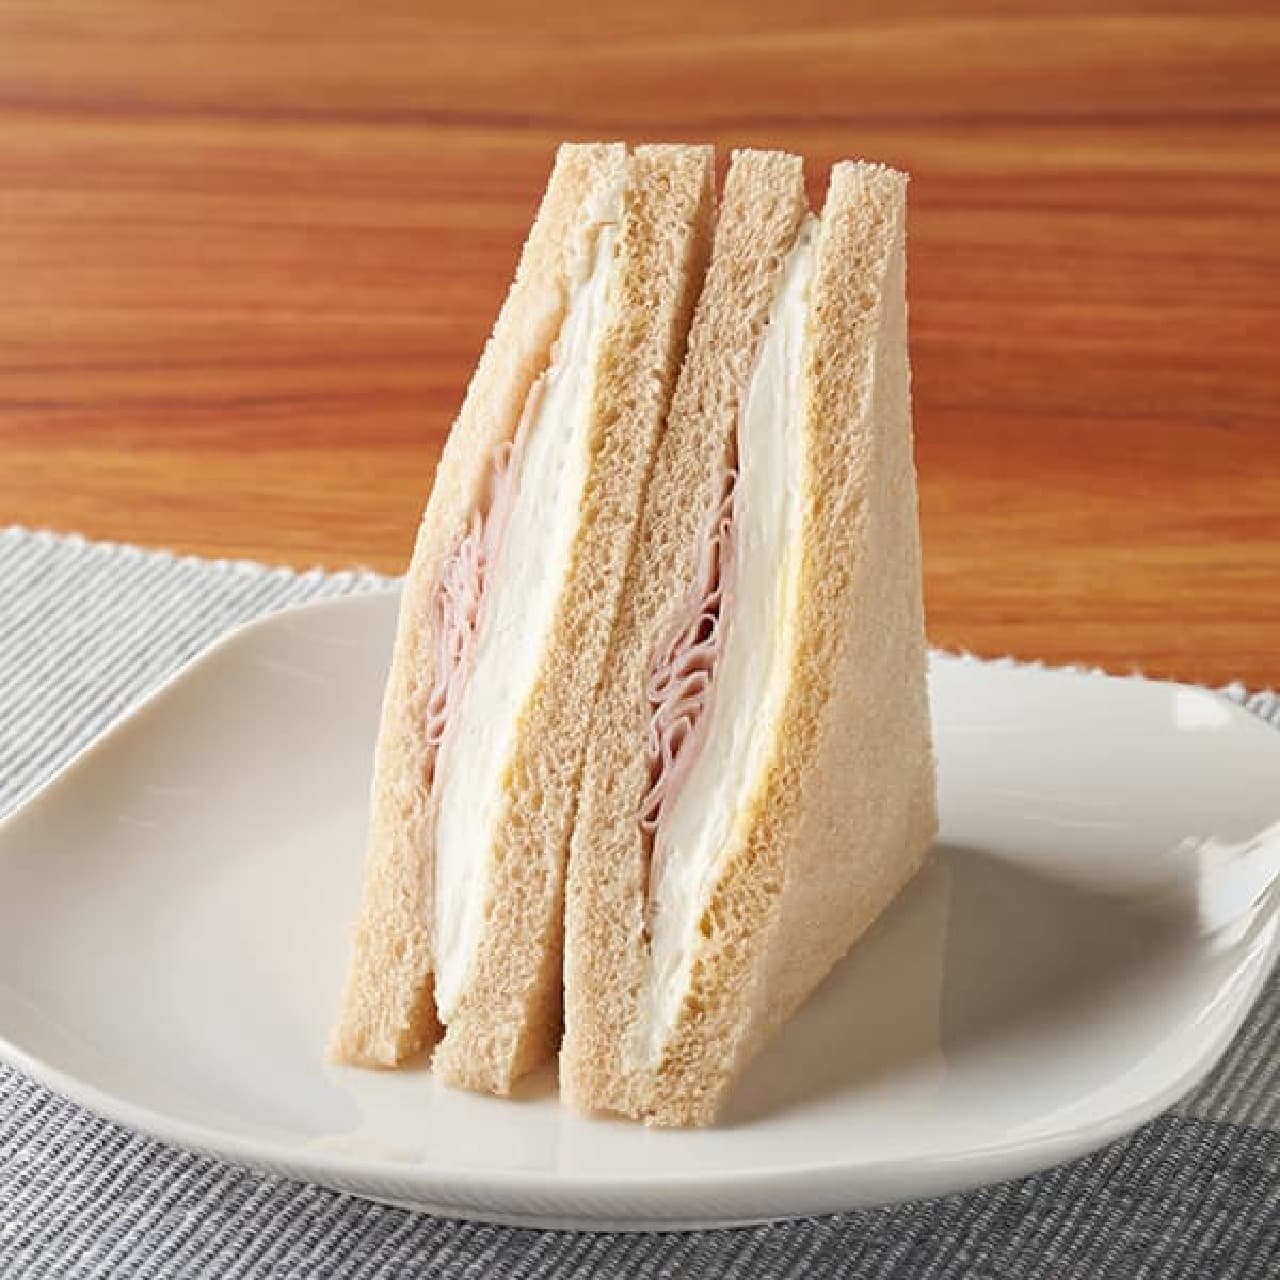 FamilyMart "Quattroformaggi Sandwich